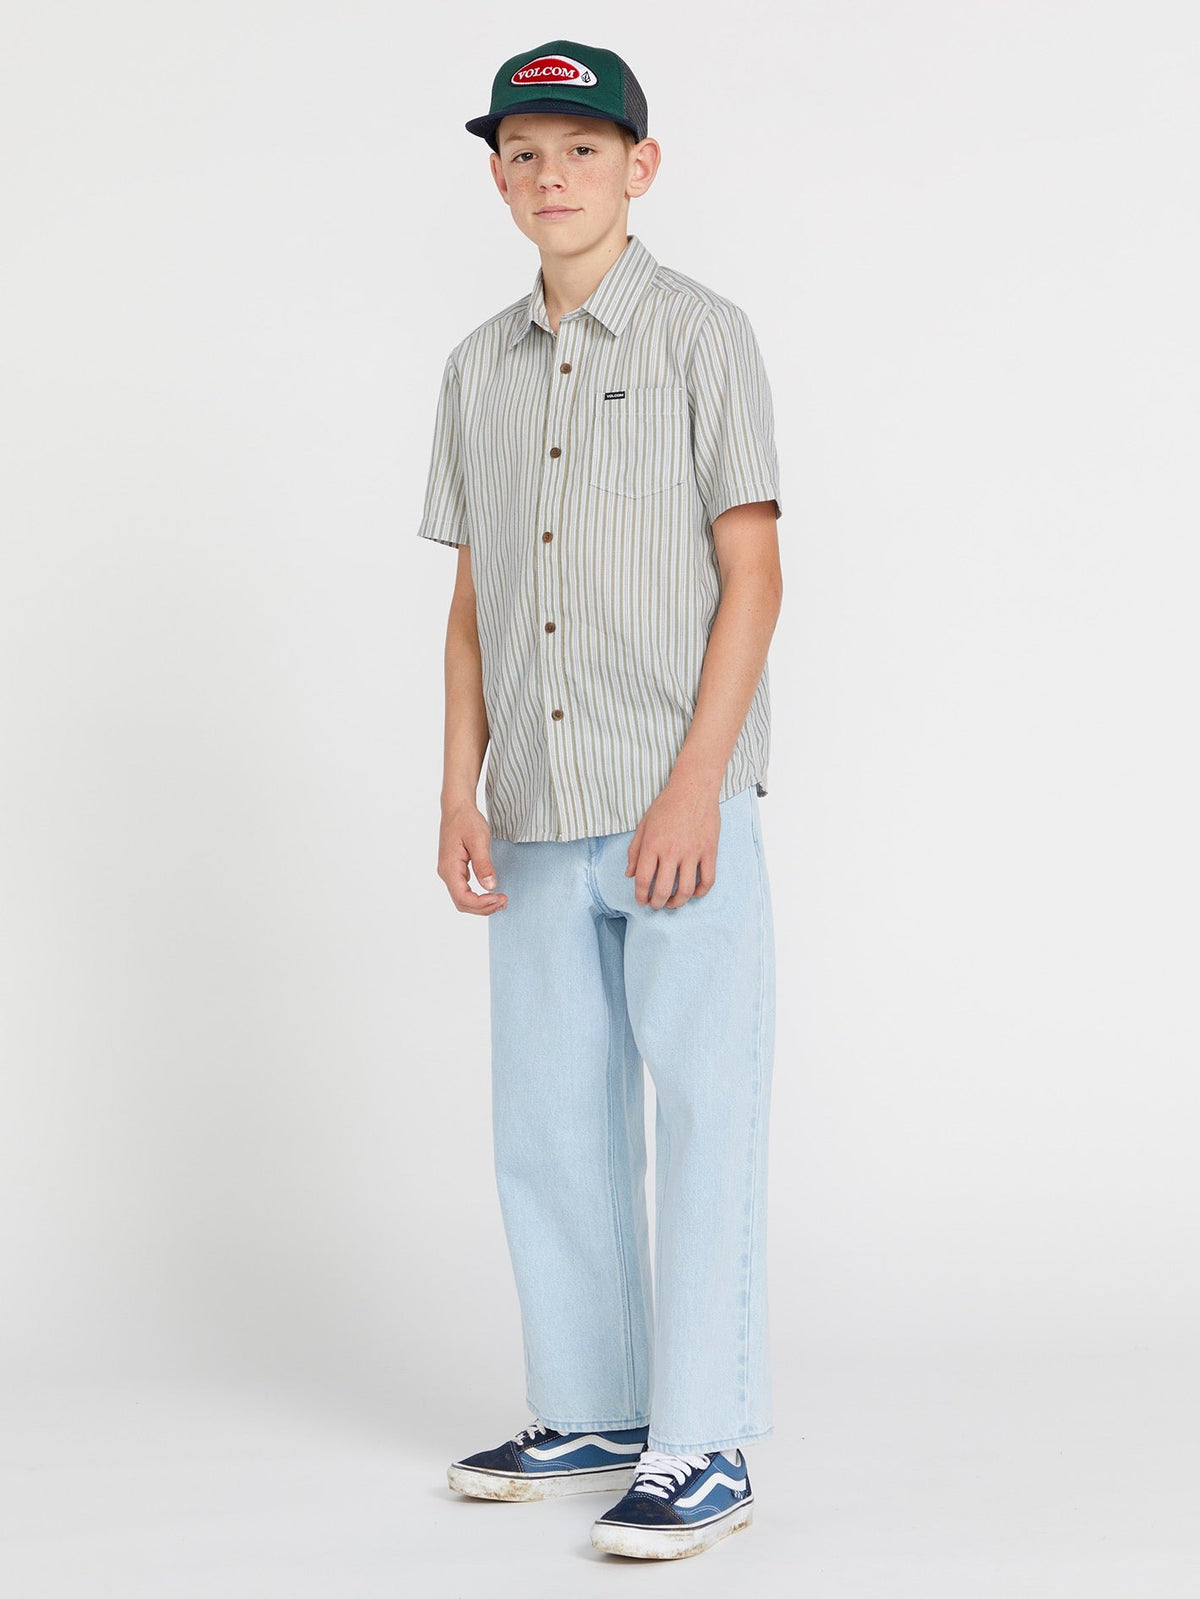 Volcom Barstone Woven Boys Short Sleeve Shirt (Age 8-14) Tower Grey